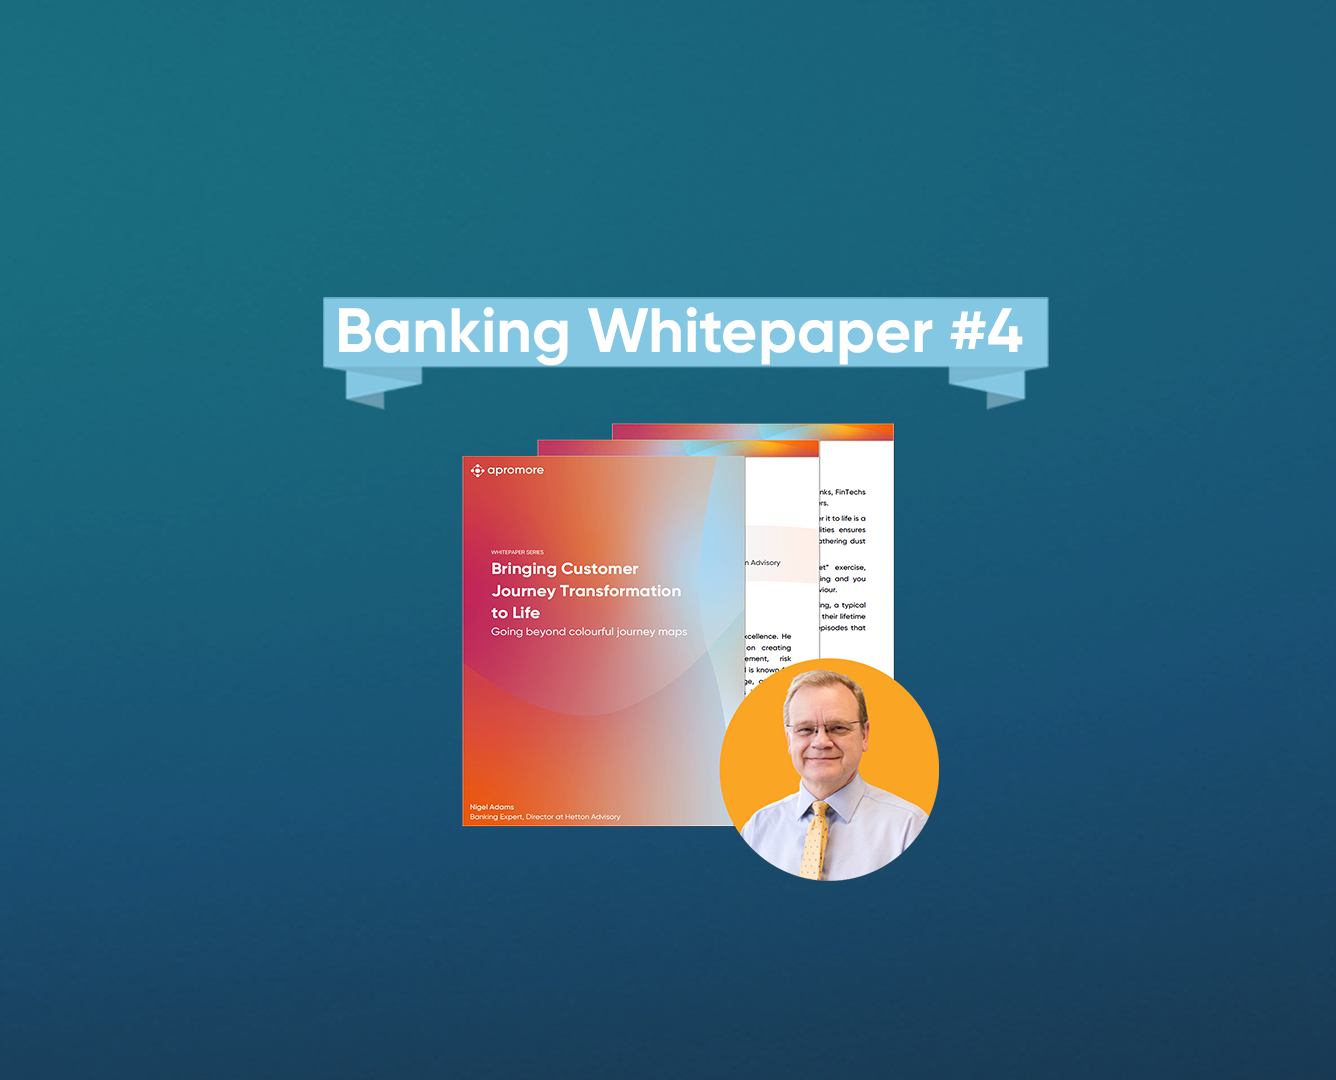 Whitepaper: Bringing Customer Journey Transformation to Life (with Nigel Adams)